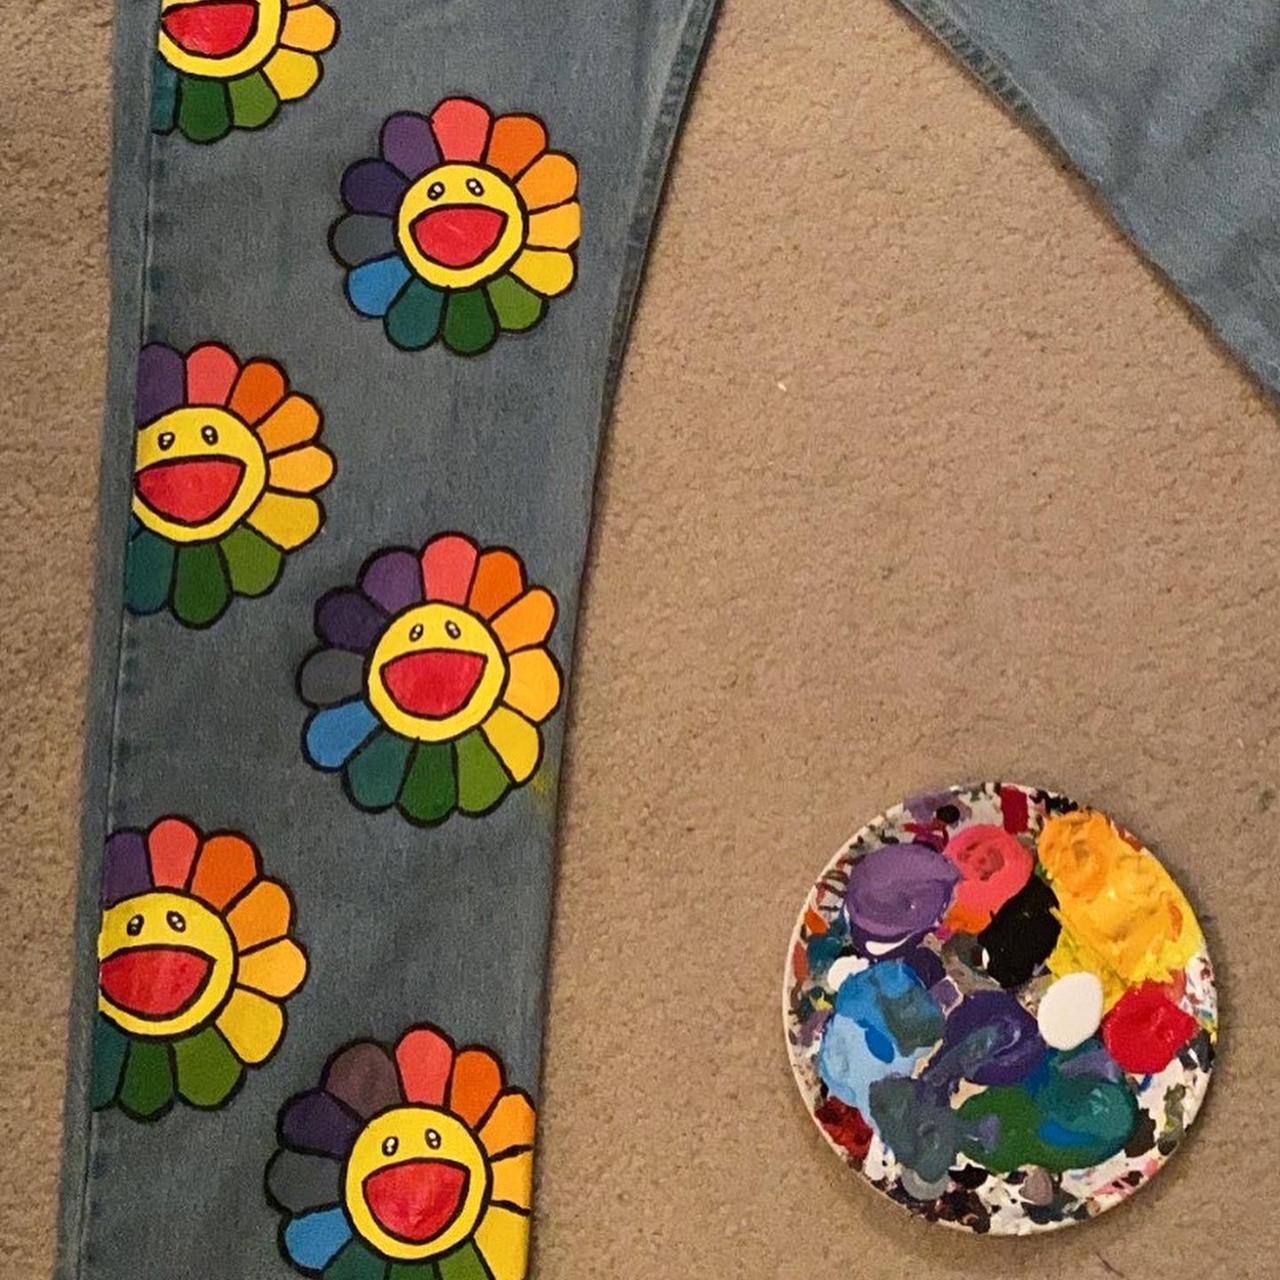 Takashi Murakami x READYMADE Flower Embroidery Jeans